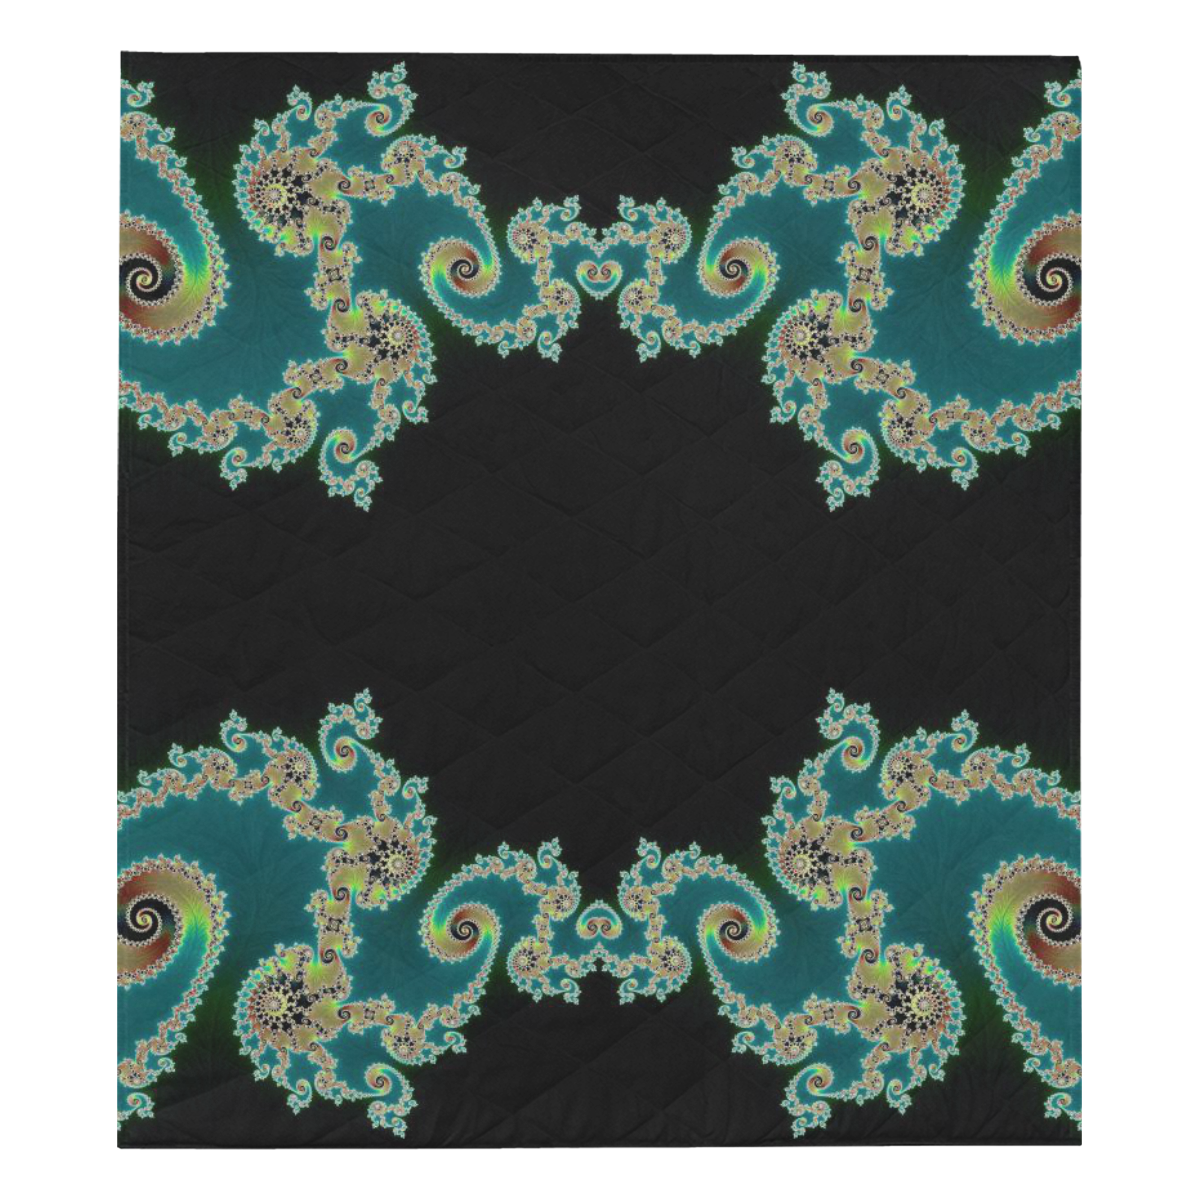 Aqua and Black  Hearts Lace Fractal Abstract Quilt 70"x80"